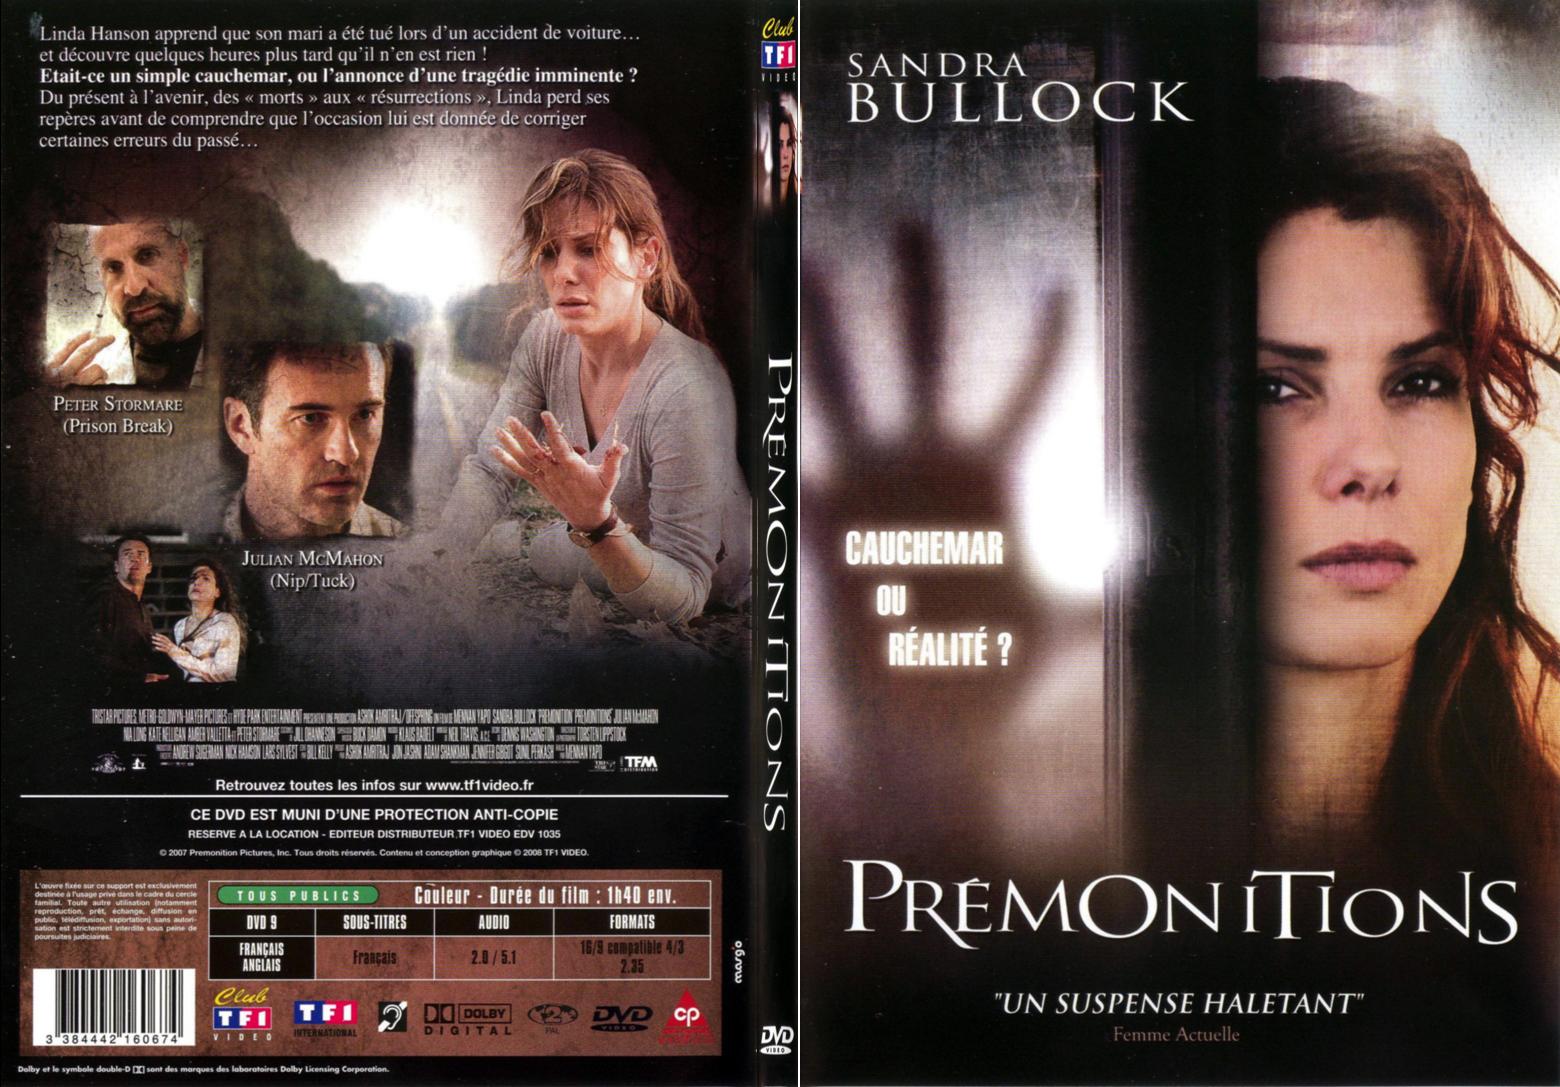 Jaquette DVD Prmonitions (Sandra Bullock) - SLIM